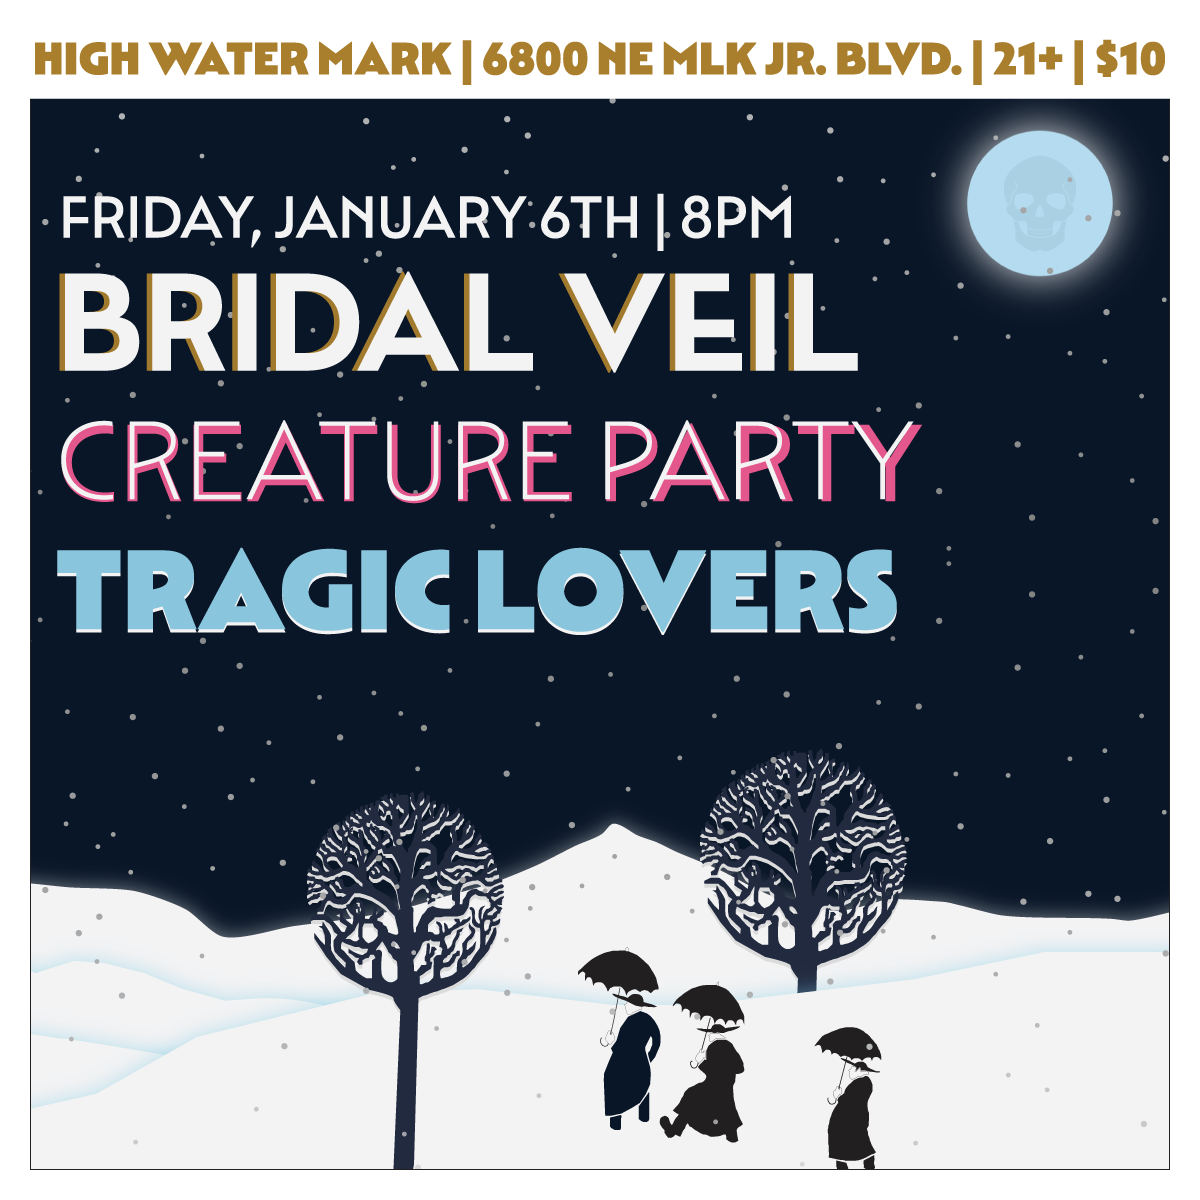 Promotional Image: Bridal Veil, Creature Party, Tragic Lovers flyer